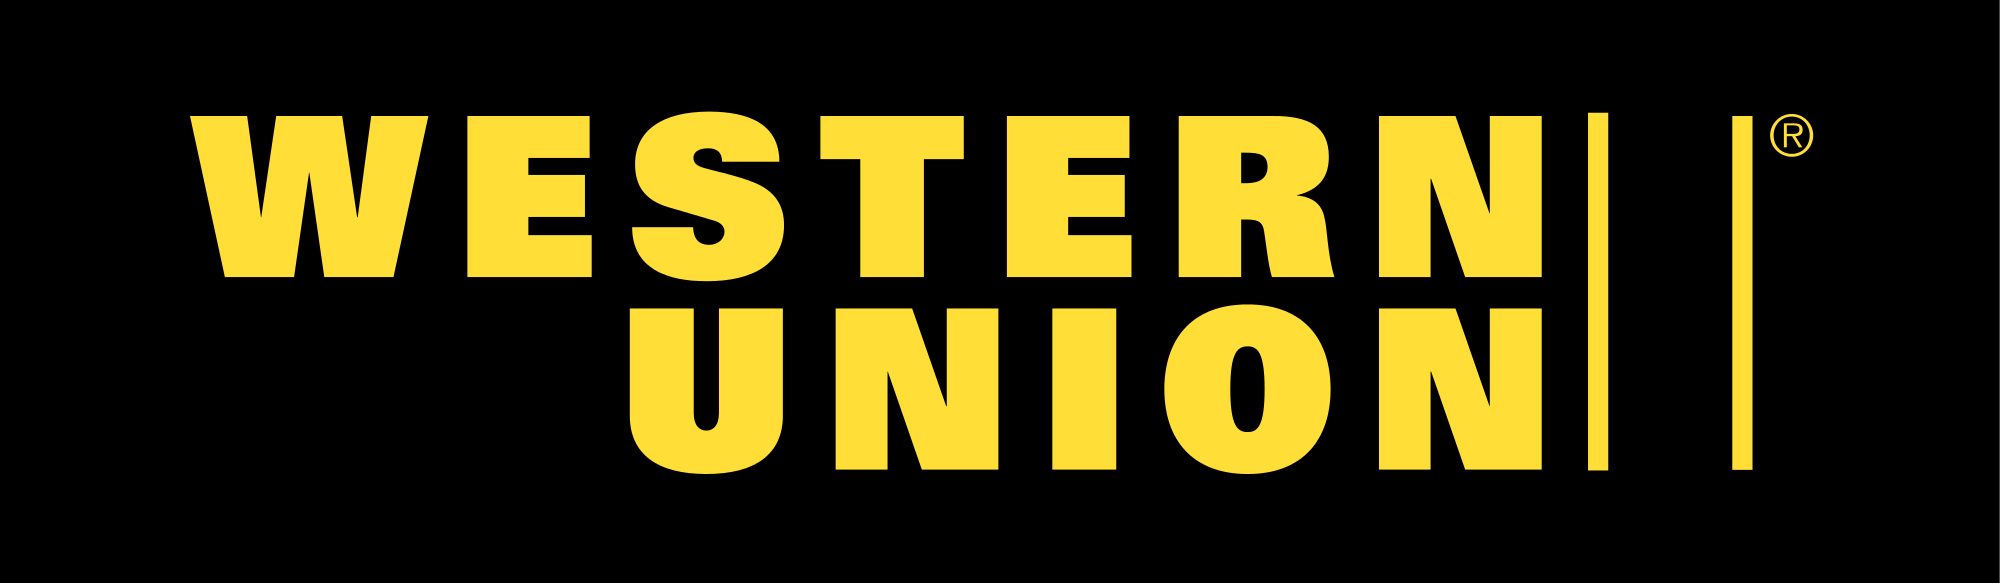 Clientes-Alumividrio-Western-Union